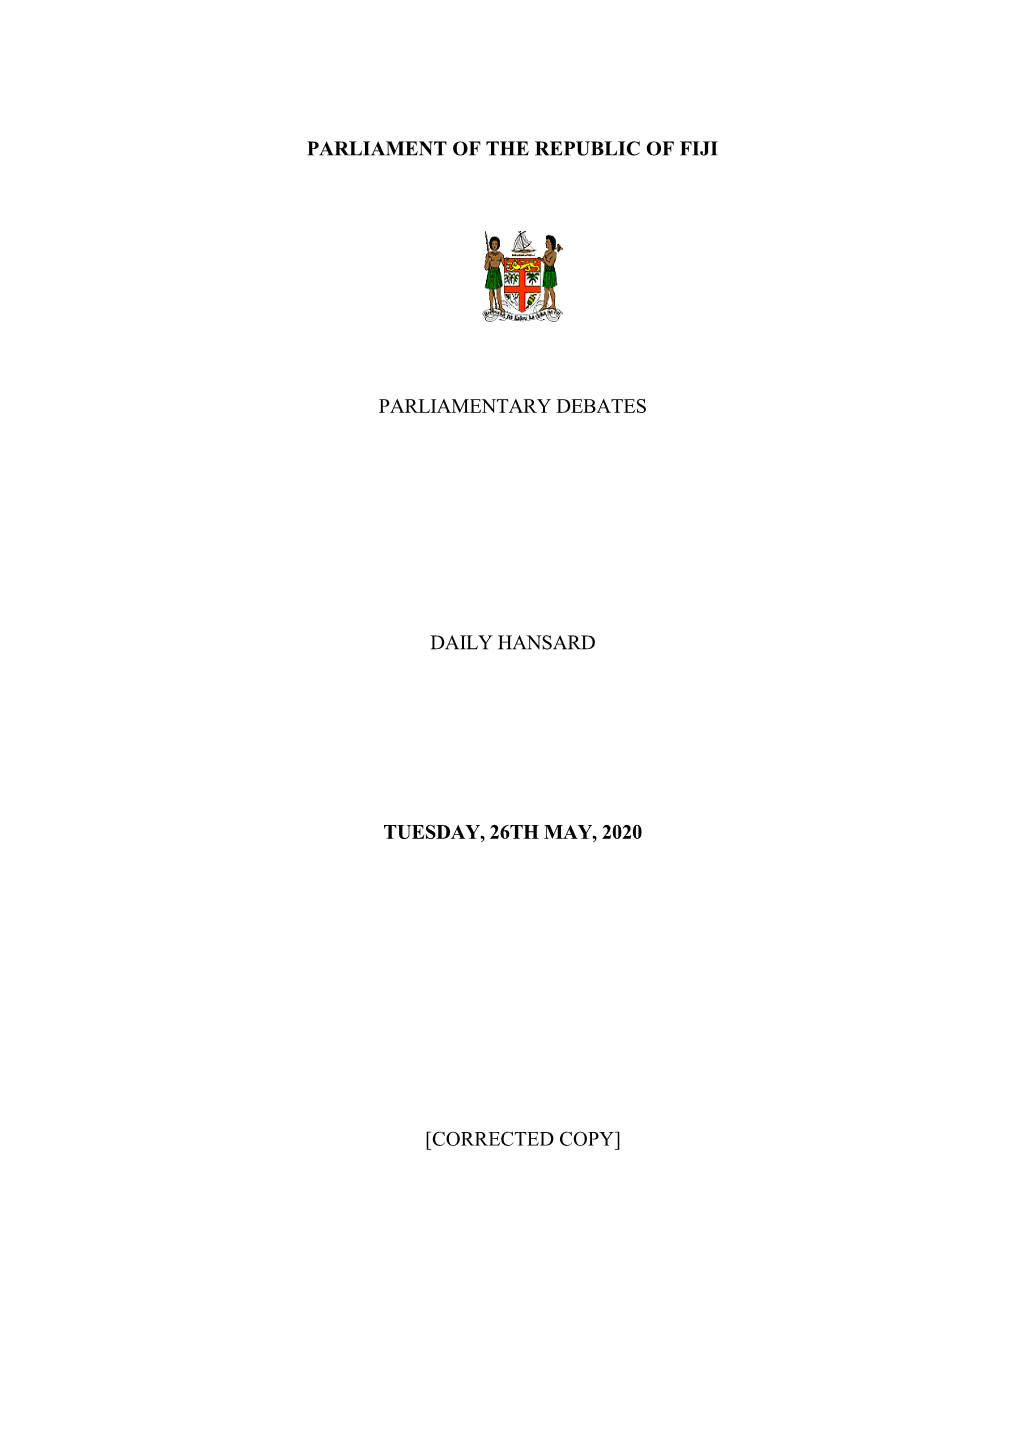 Parliament of the Republic of Fiji Parliamentary Debates Daily Hansard Tuesday, 26Th May, 2020 [Corrected Copy]